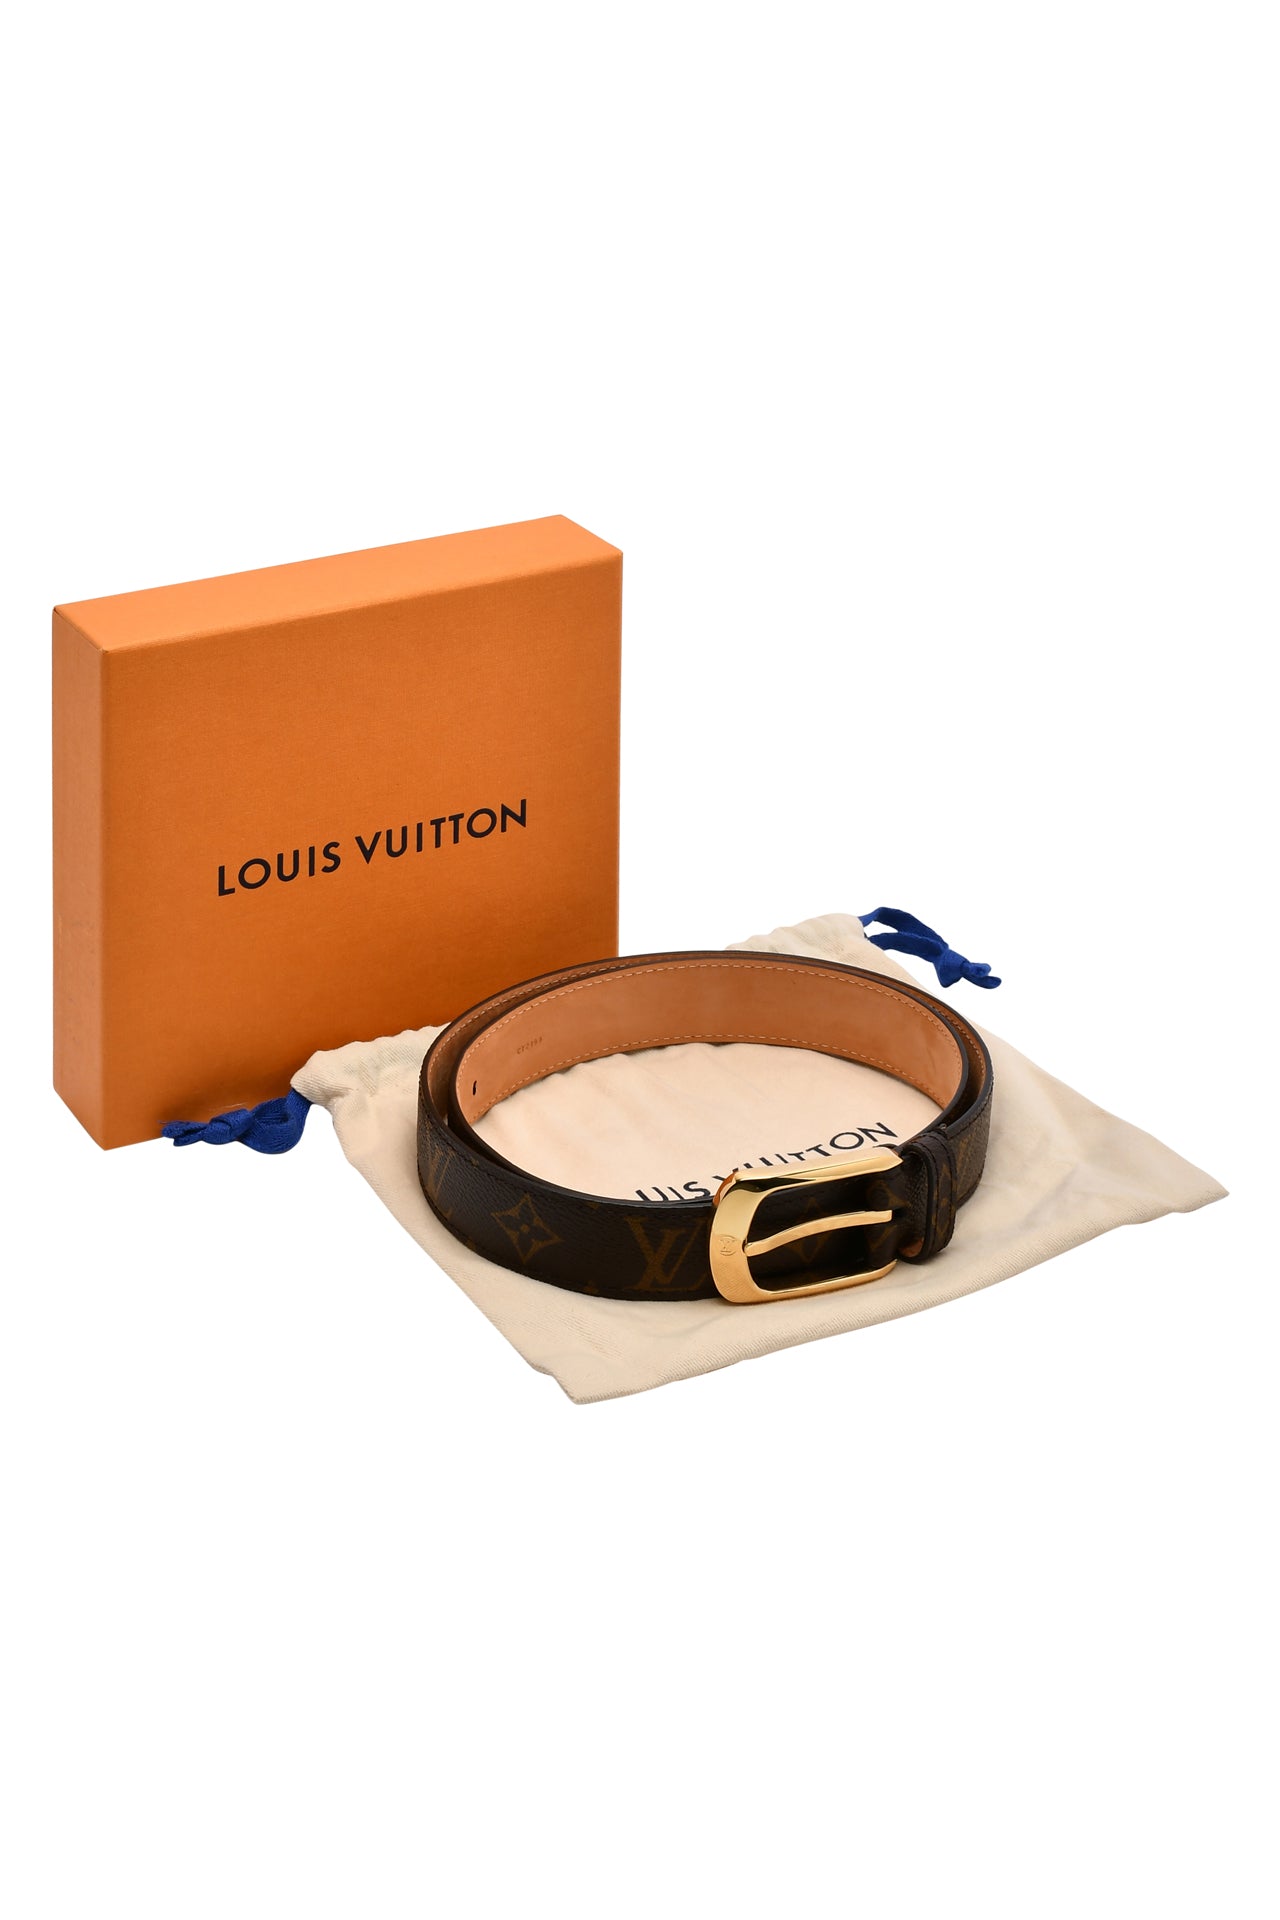 Louis Vuitton Ellipse Monogram Belt 85 cm